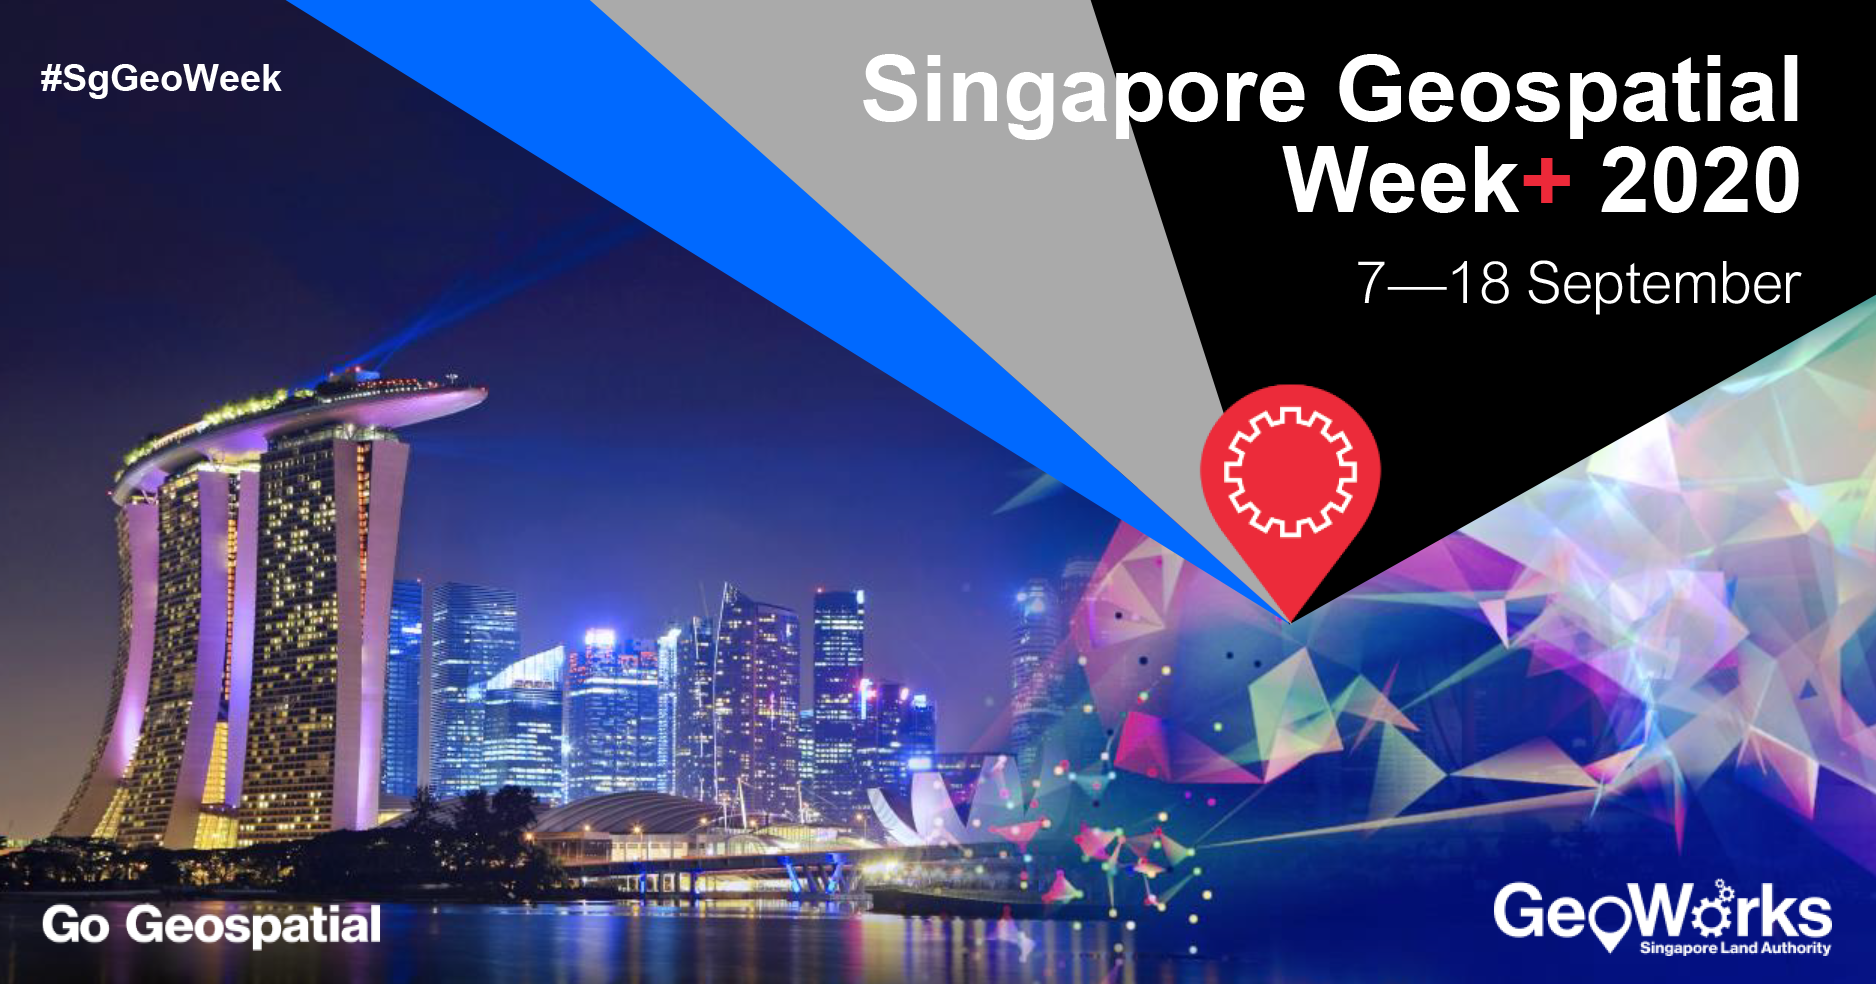 #SgGeoWeek: SLA GeoWorks’ geospatial celebration - the 2nd Singapore Geospatial Week goes virtual and regional in 2020